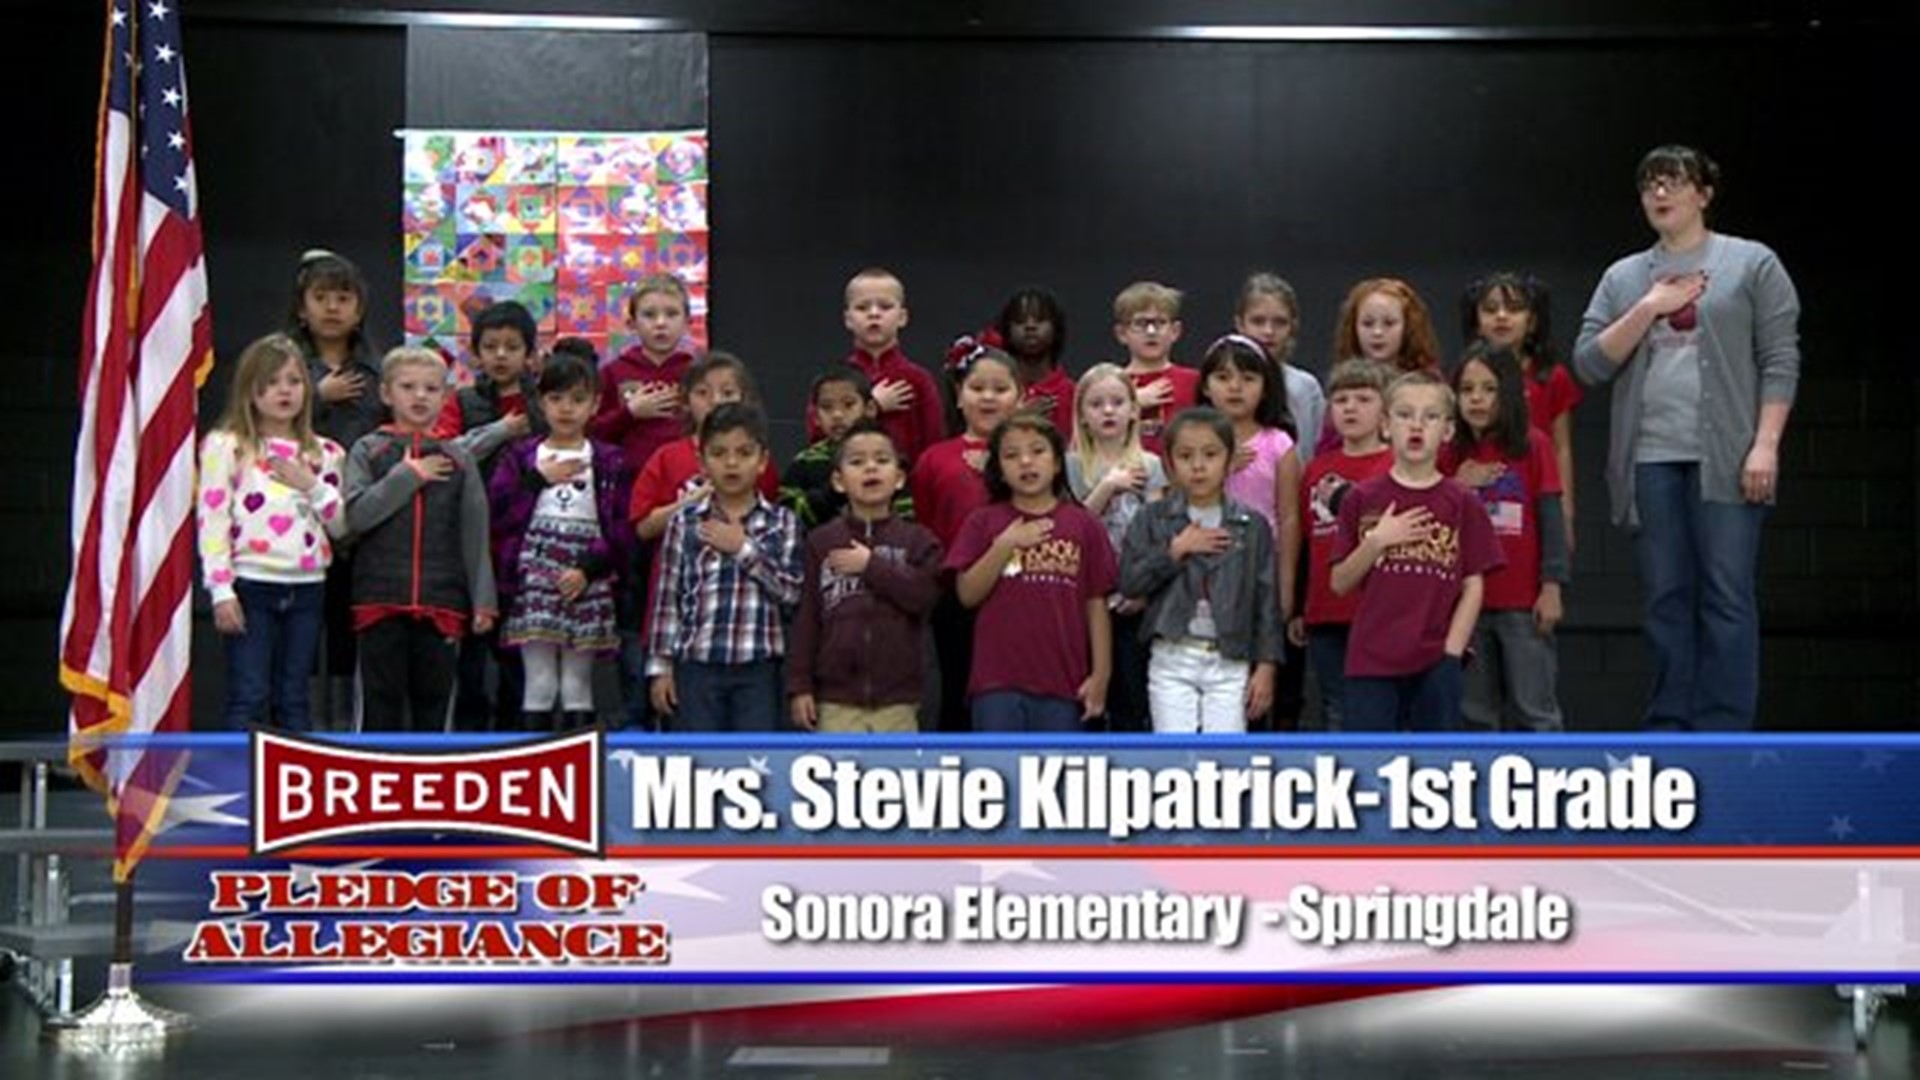 Sonora Elementary, Springdale - Mrs. Stevie Kilpatrick - 1st Grade